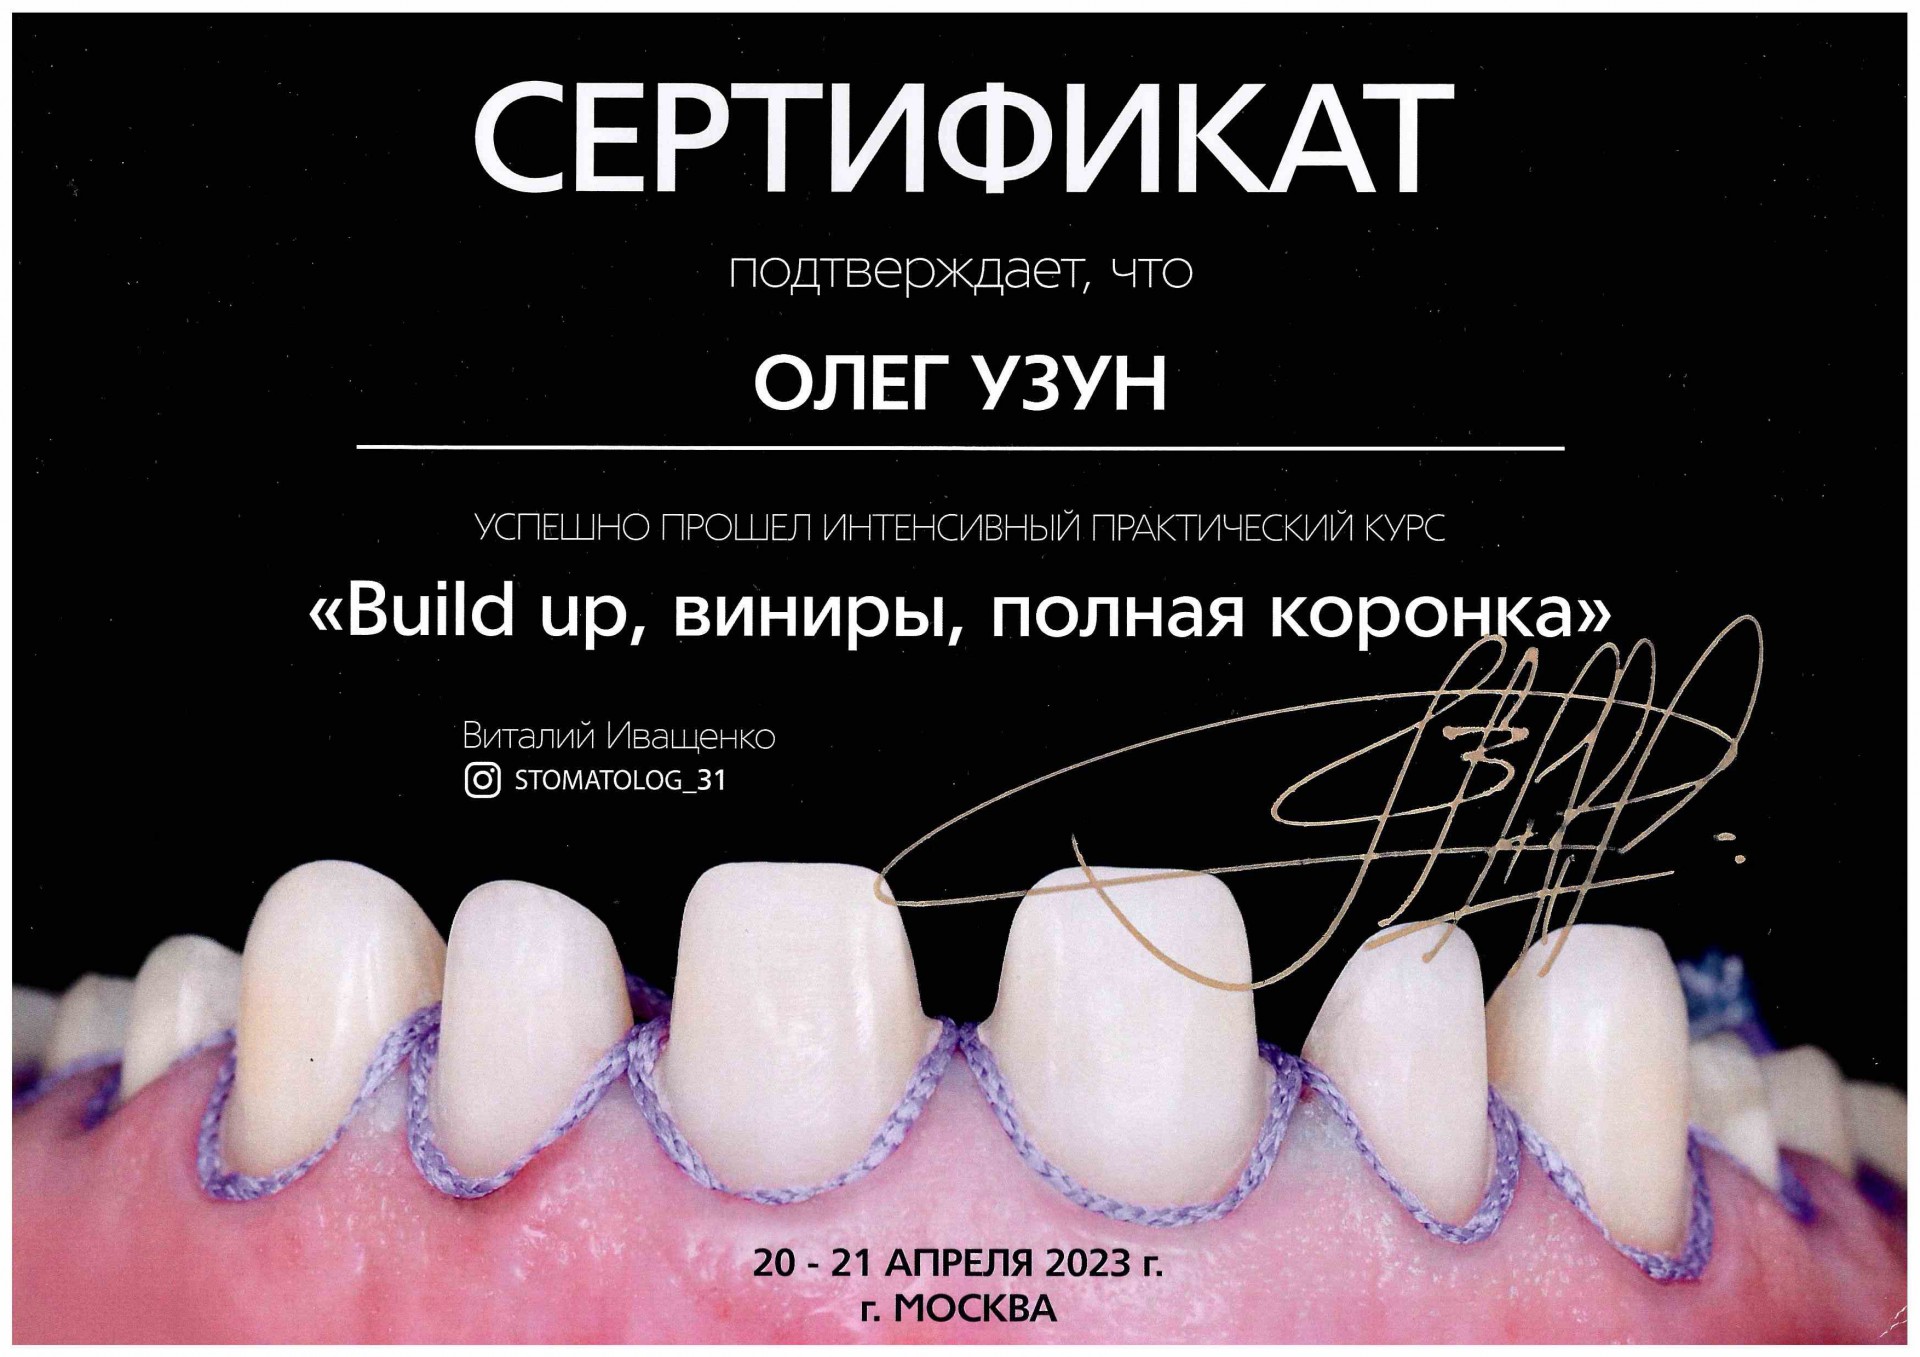 Oleg Uzun medico dentista ortopedico